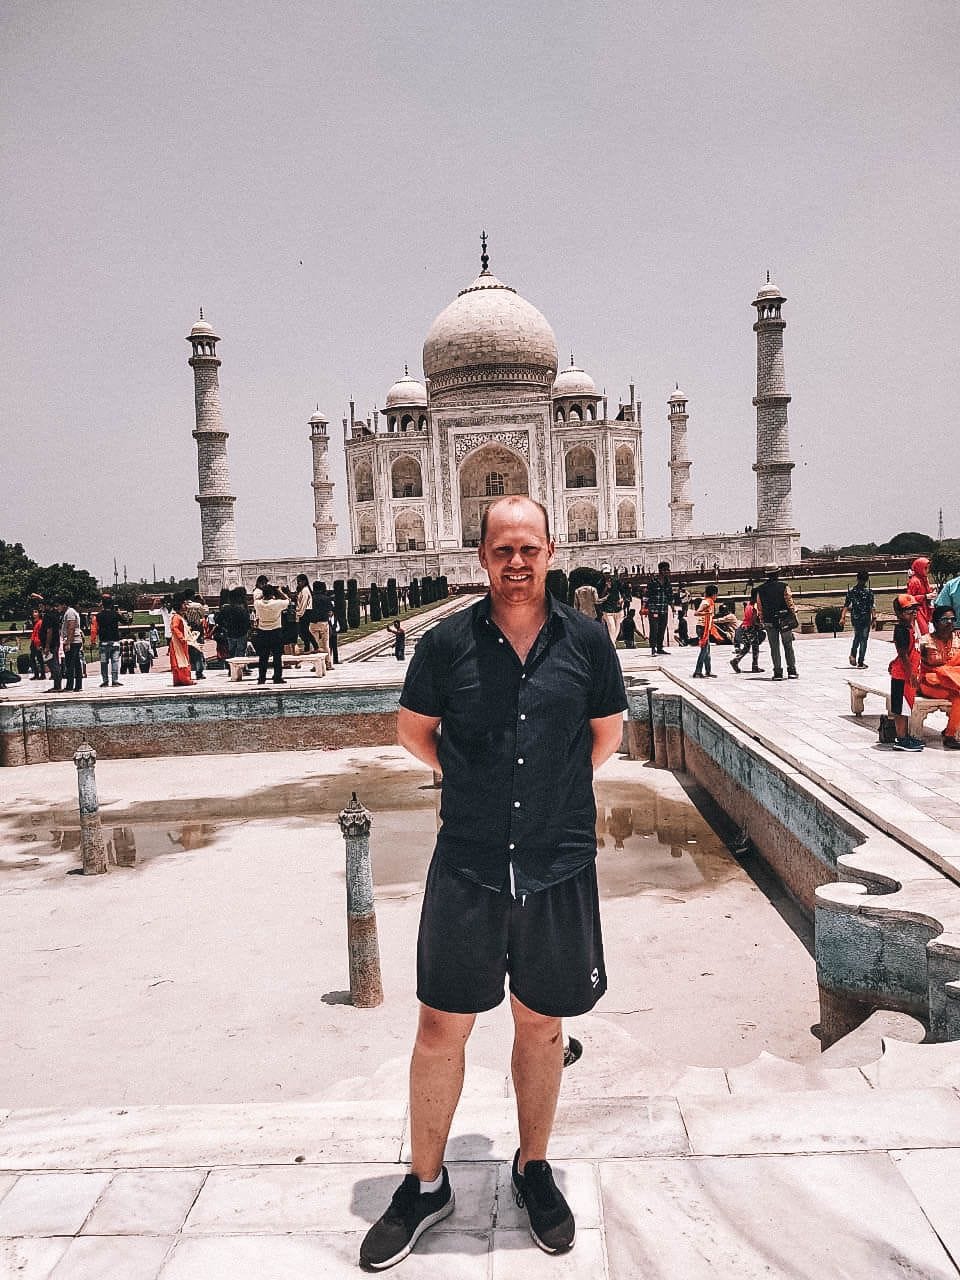 Tourism at the Taj Mahal in Agra